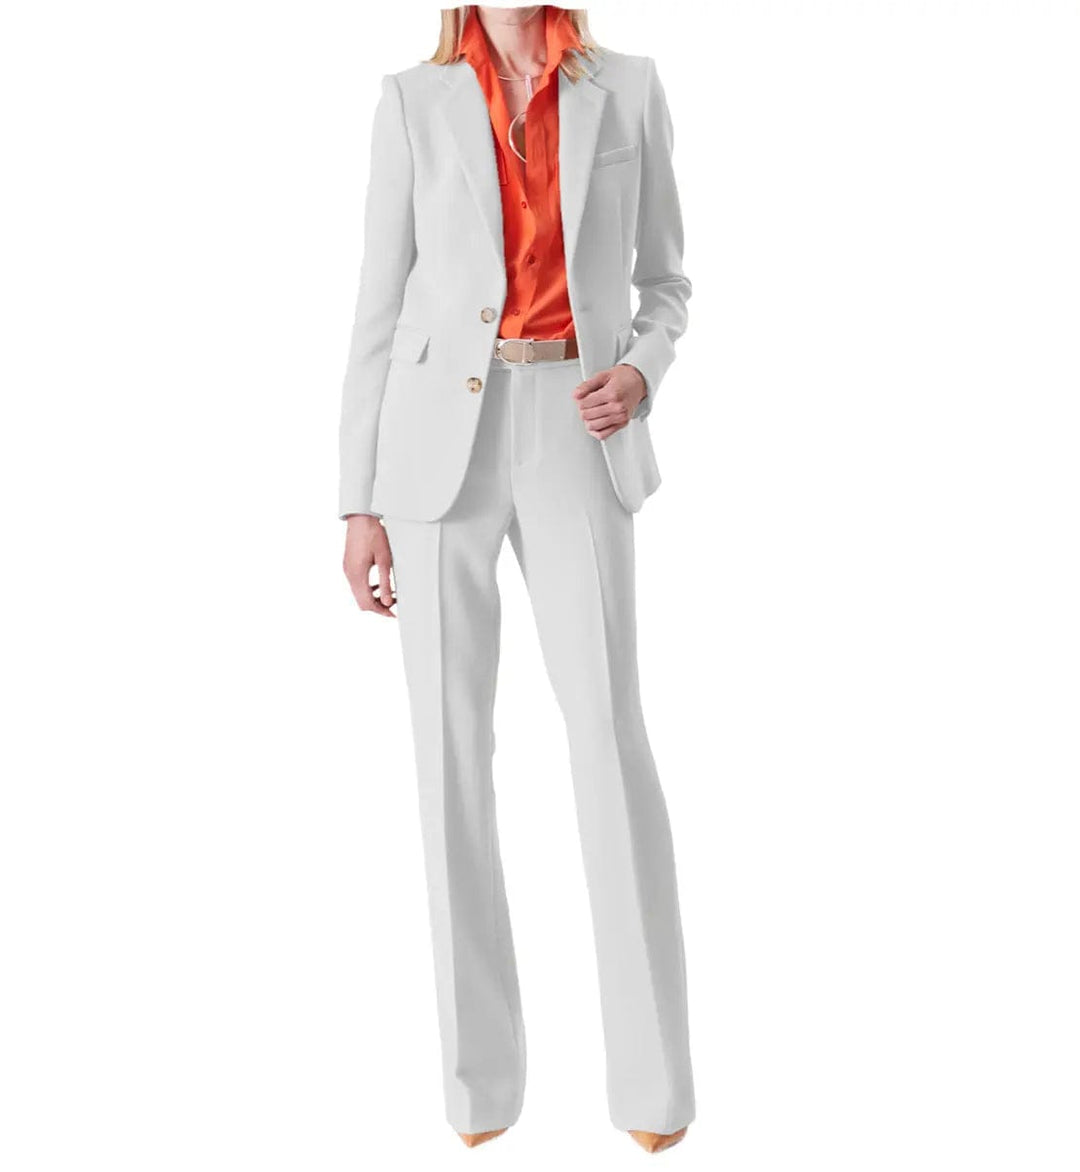 solovedress 2 piece Notch Lapel Women Suit (Blazer+Pants)